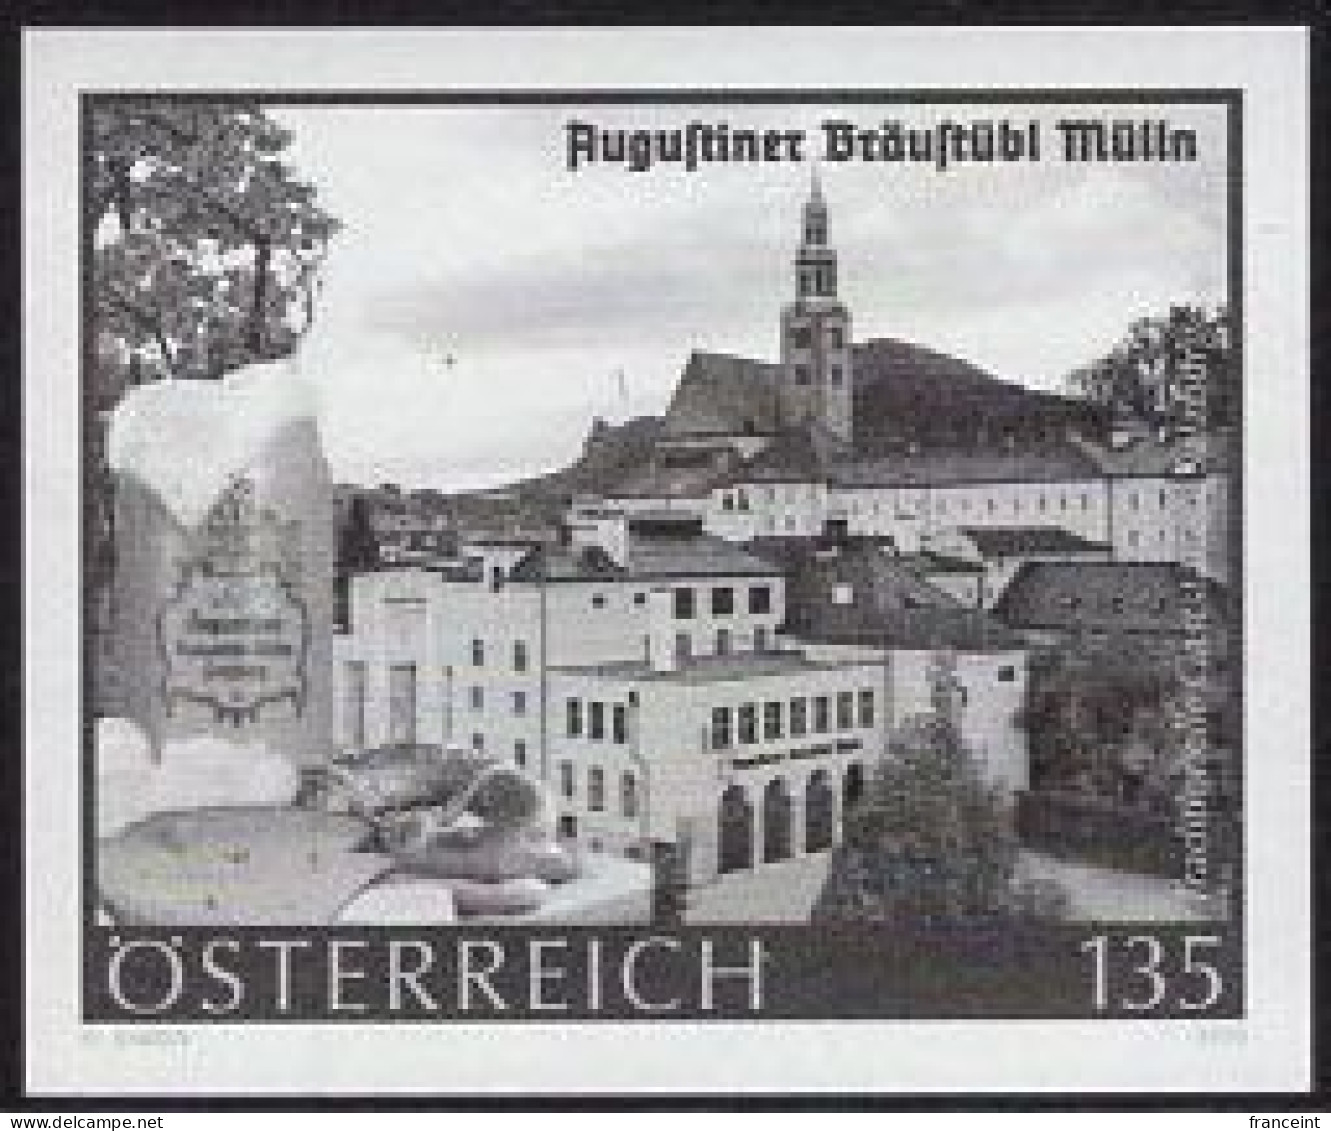 AUSTRIA(2022) Augustiner Bräustübl Mülln. Black Print. More Than 400 Years Of Beer! - Proofs & Reprints